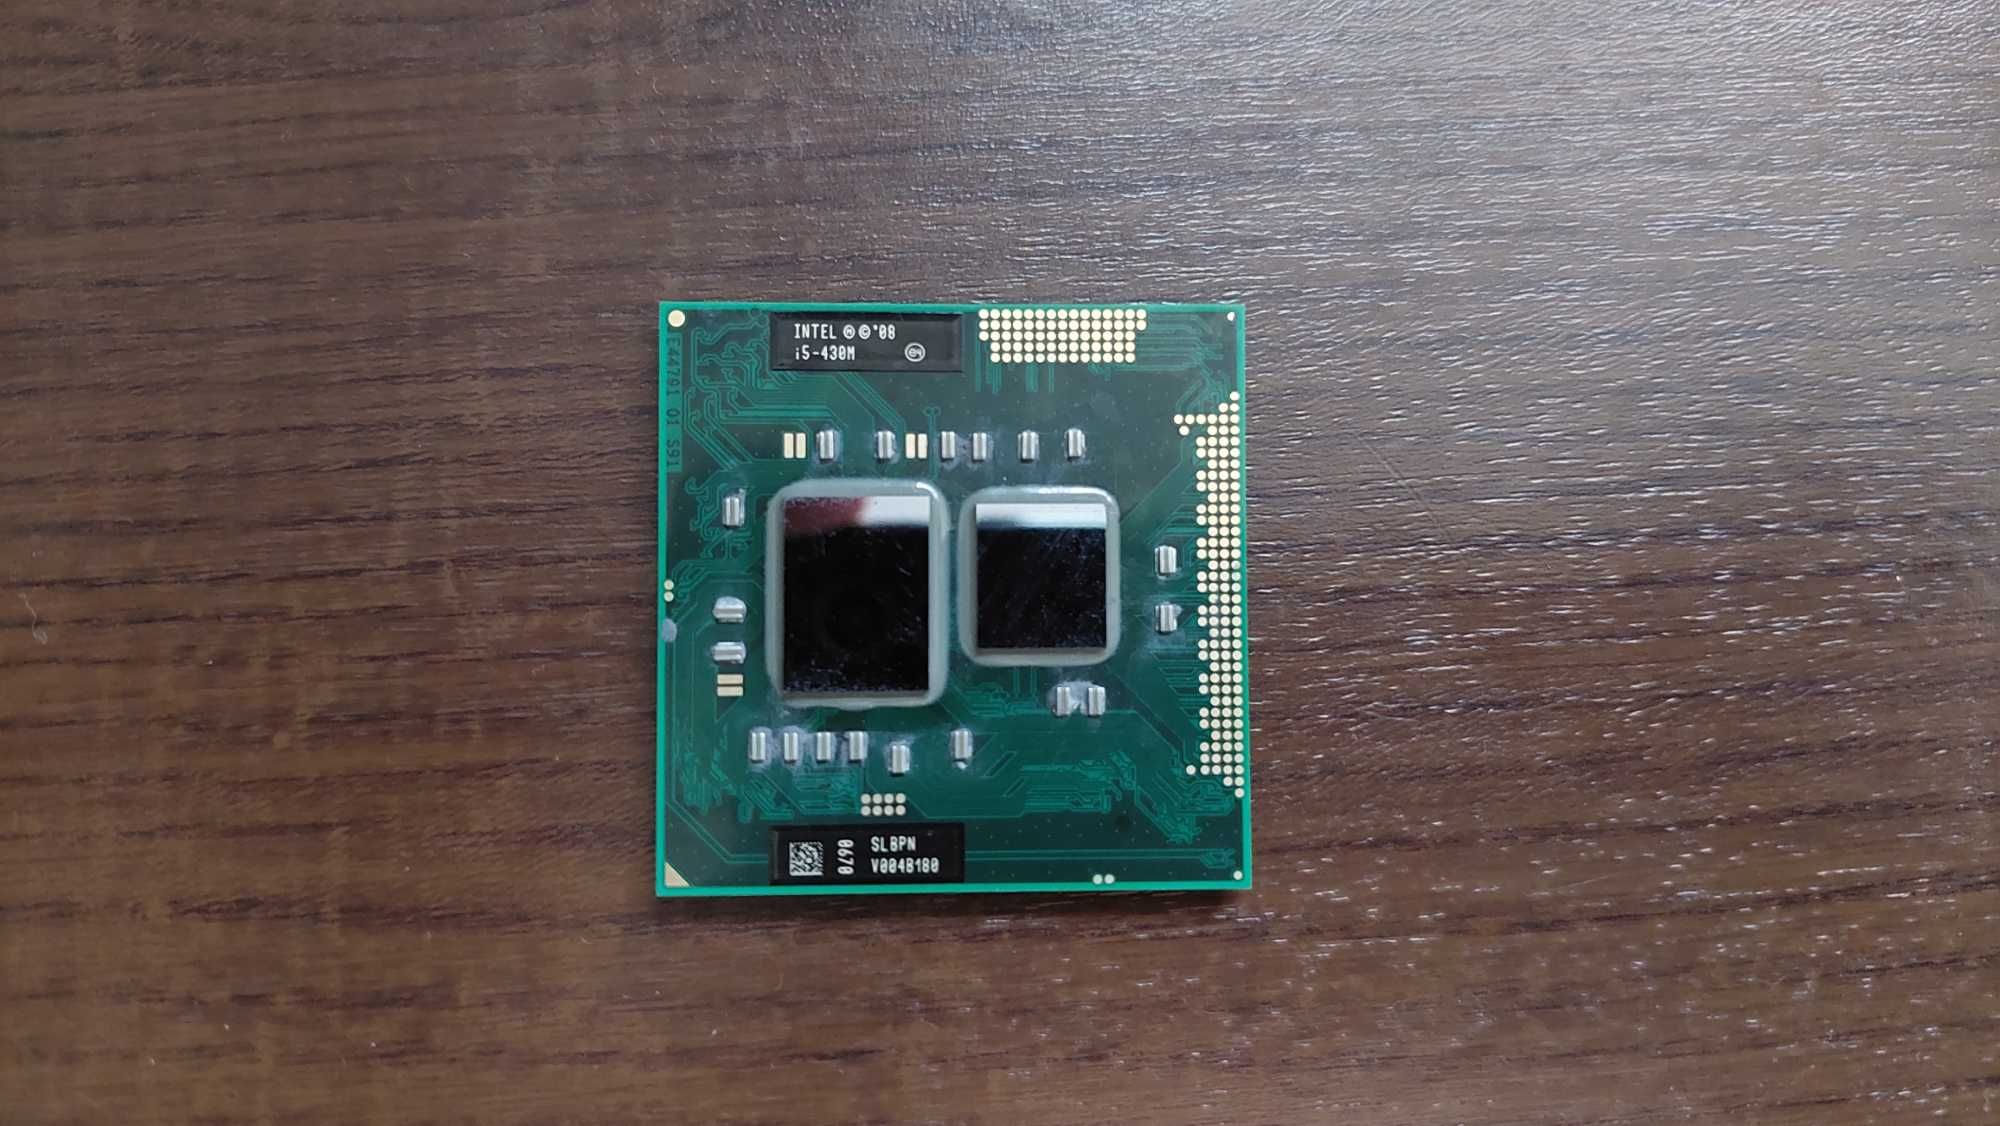 Intel Core i5-430m